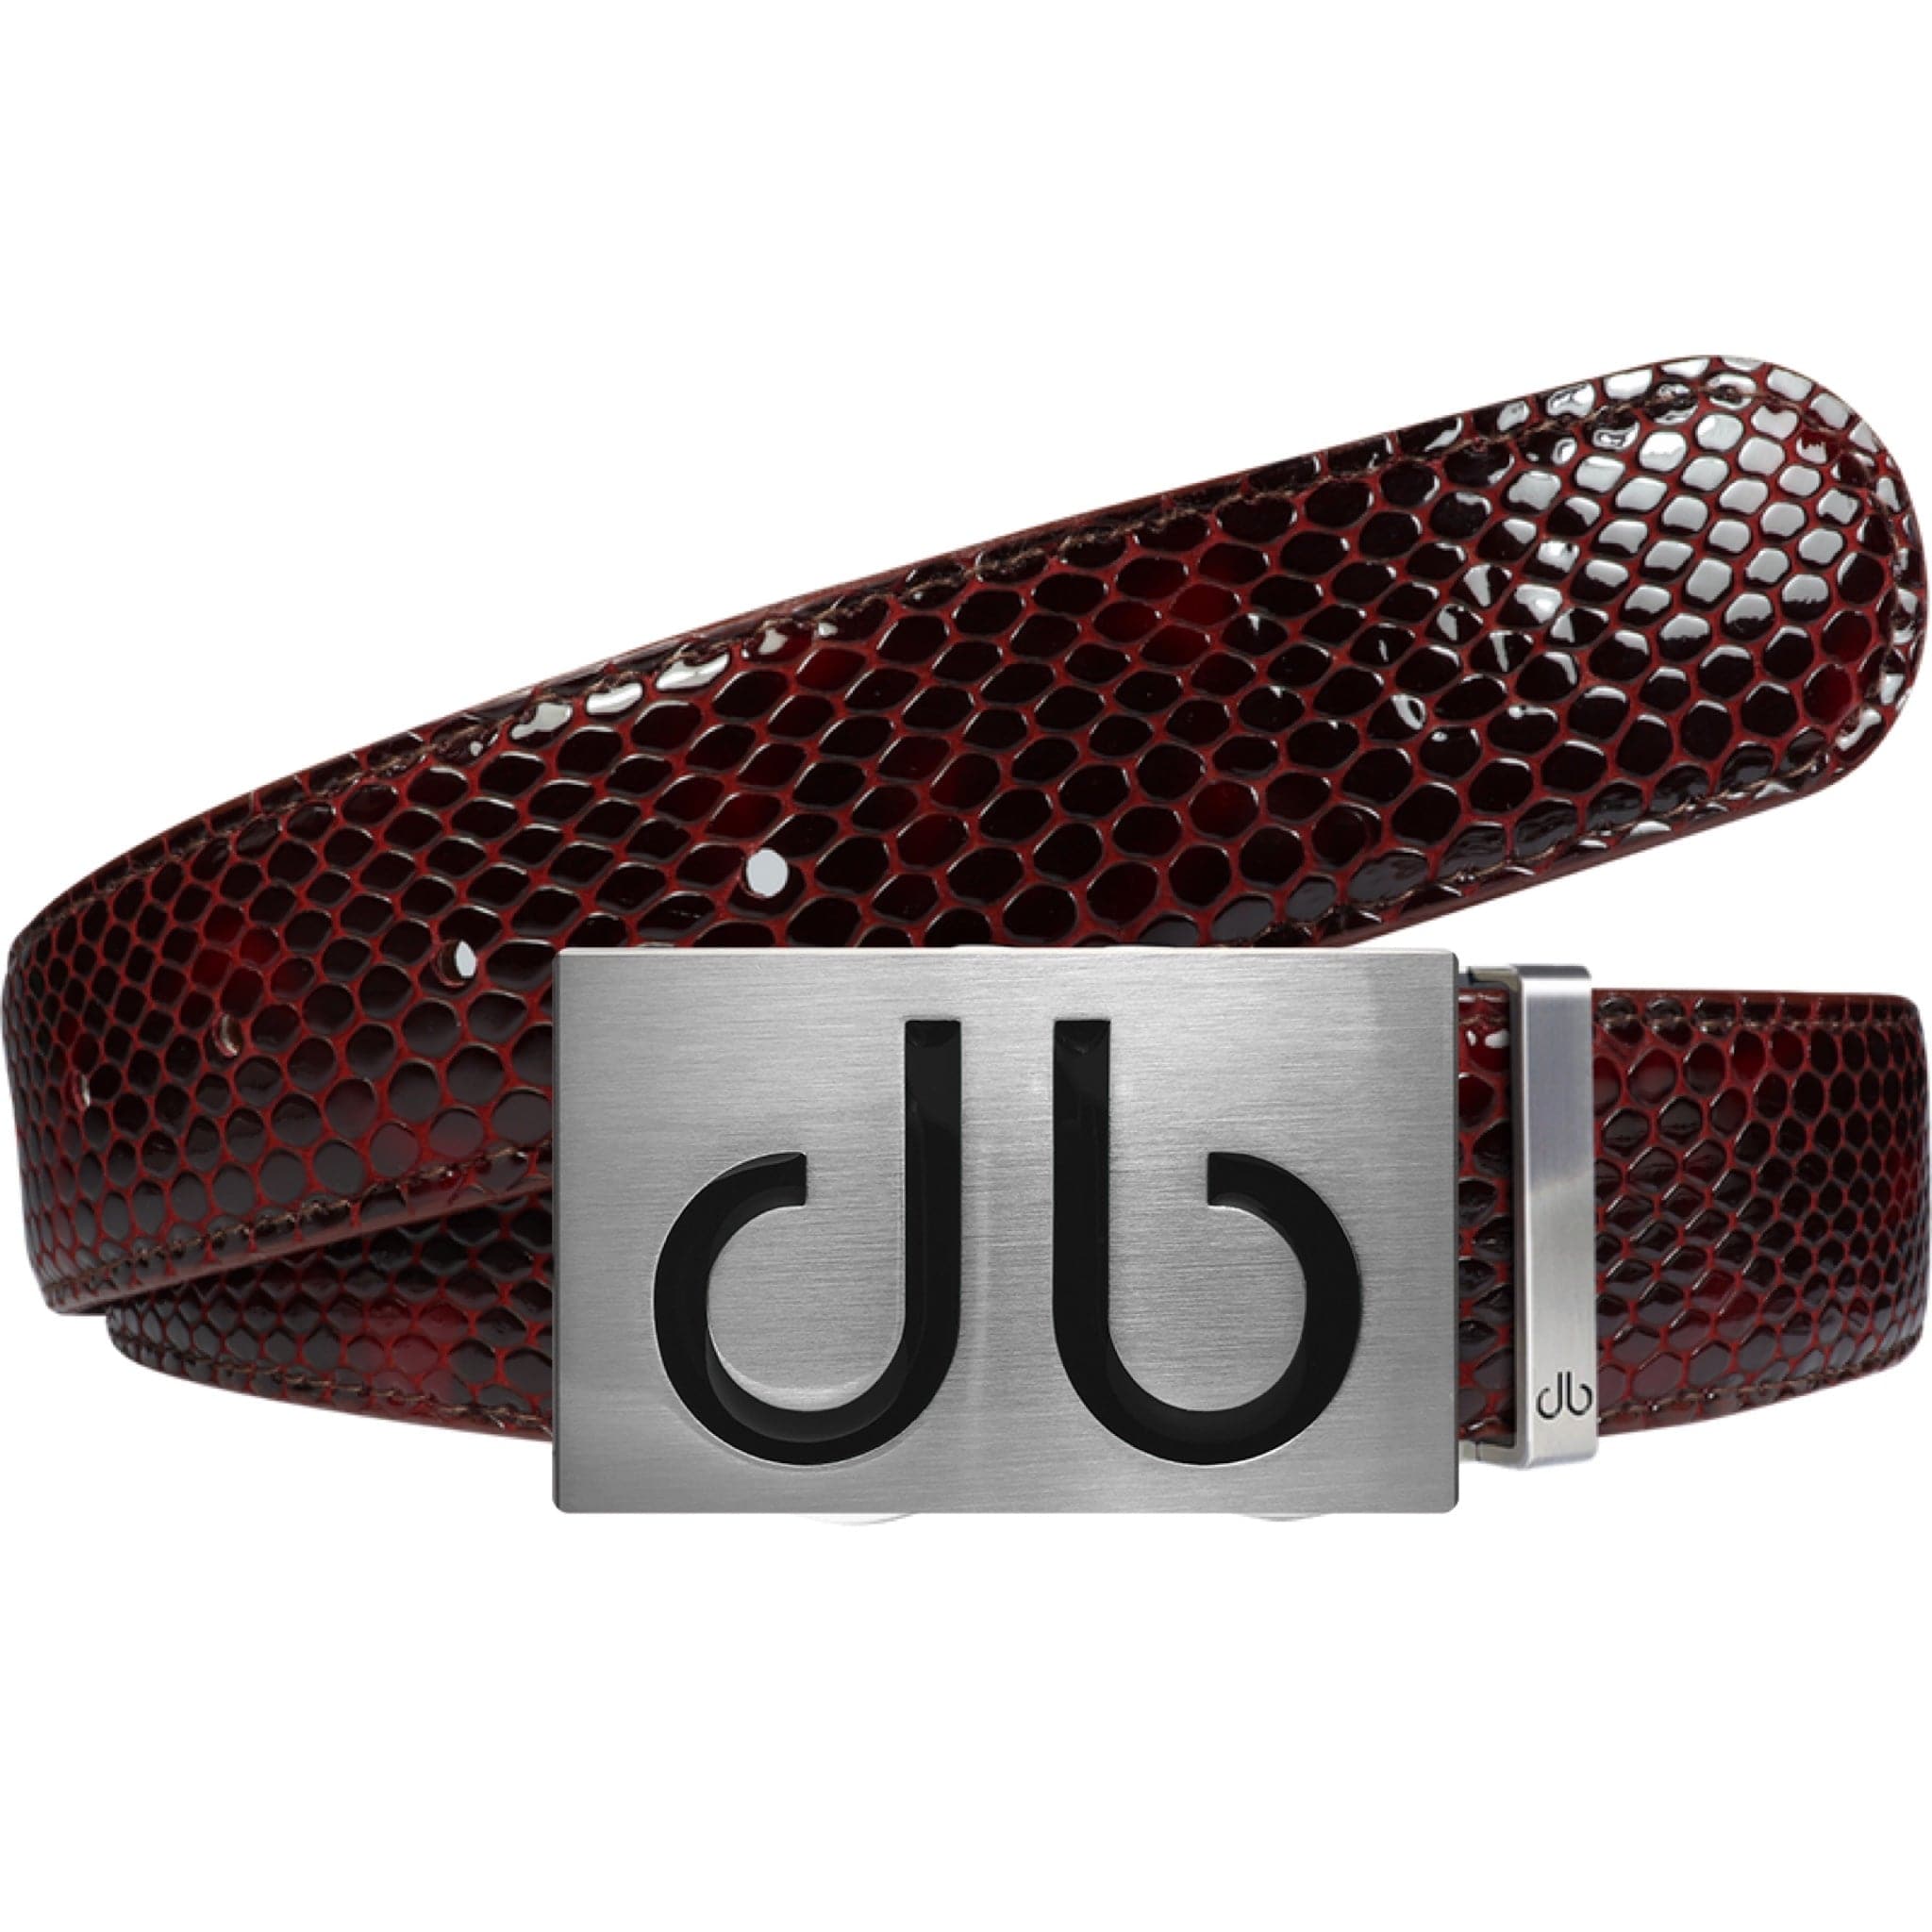 Maroon / Infill Snakeskin Leather Belts Druh Belts USA